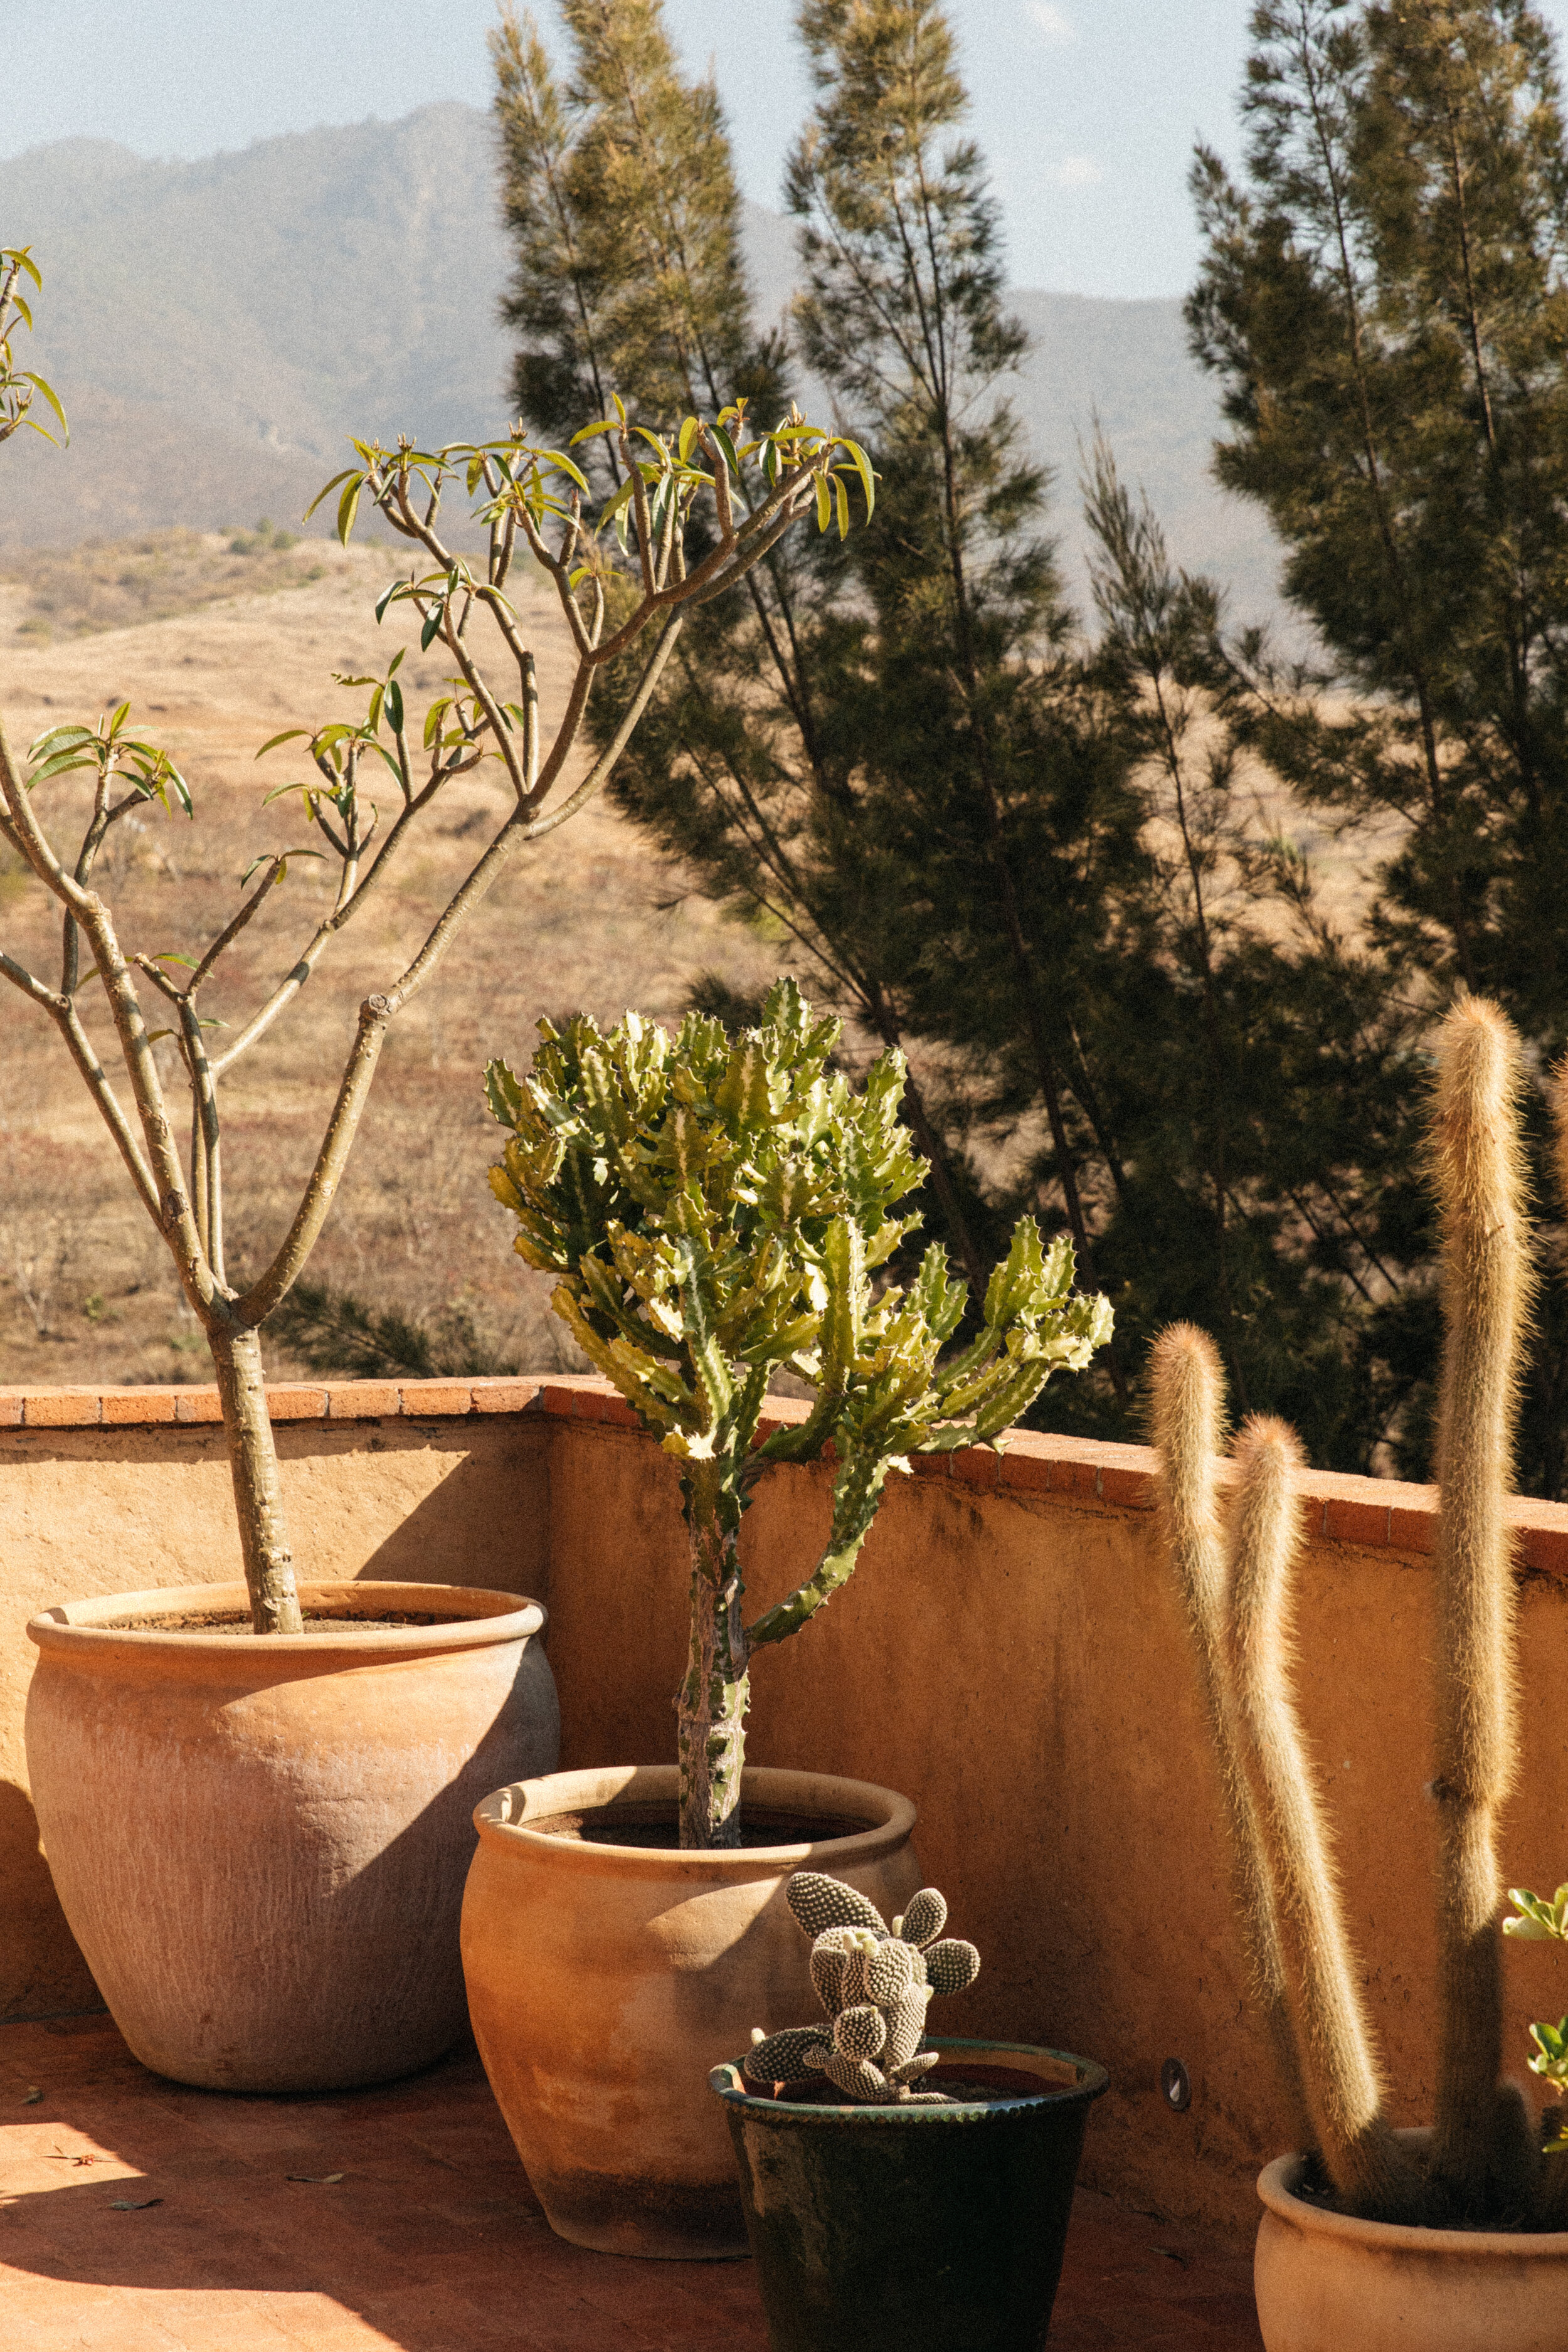 Hotel_Weekend-BArefoot-Luxury-Casa-bicu-Oaxaca-Details-cactus-mountains-landscape.jpg